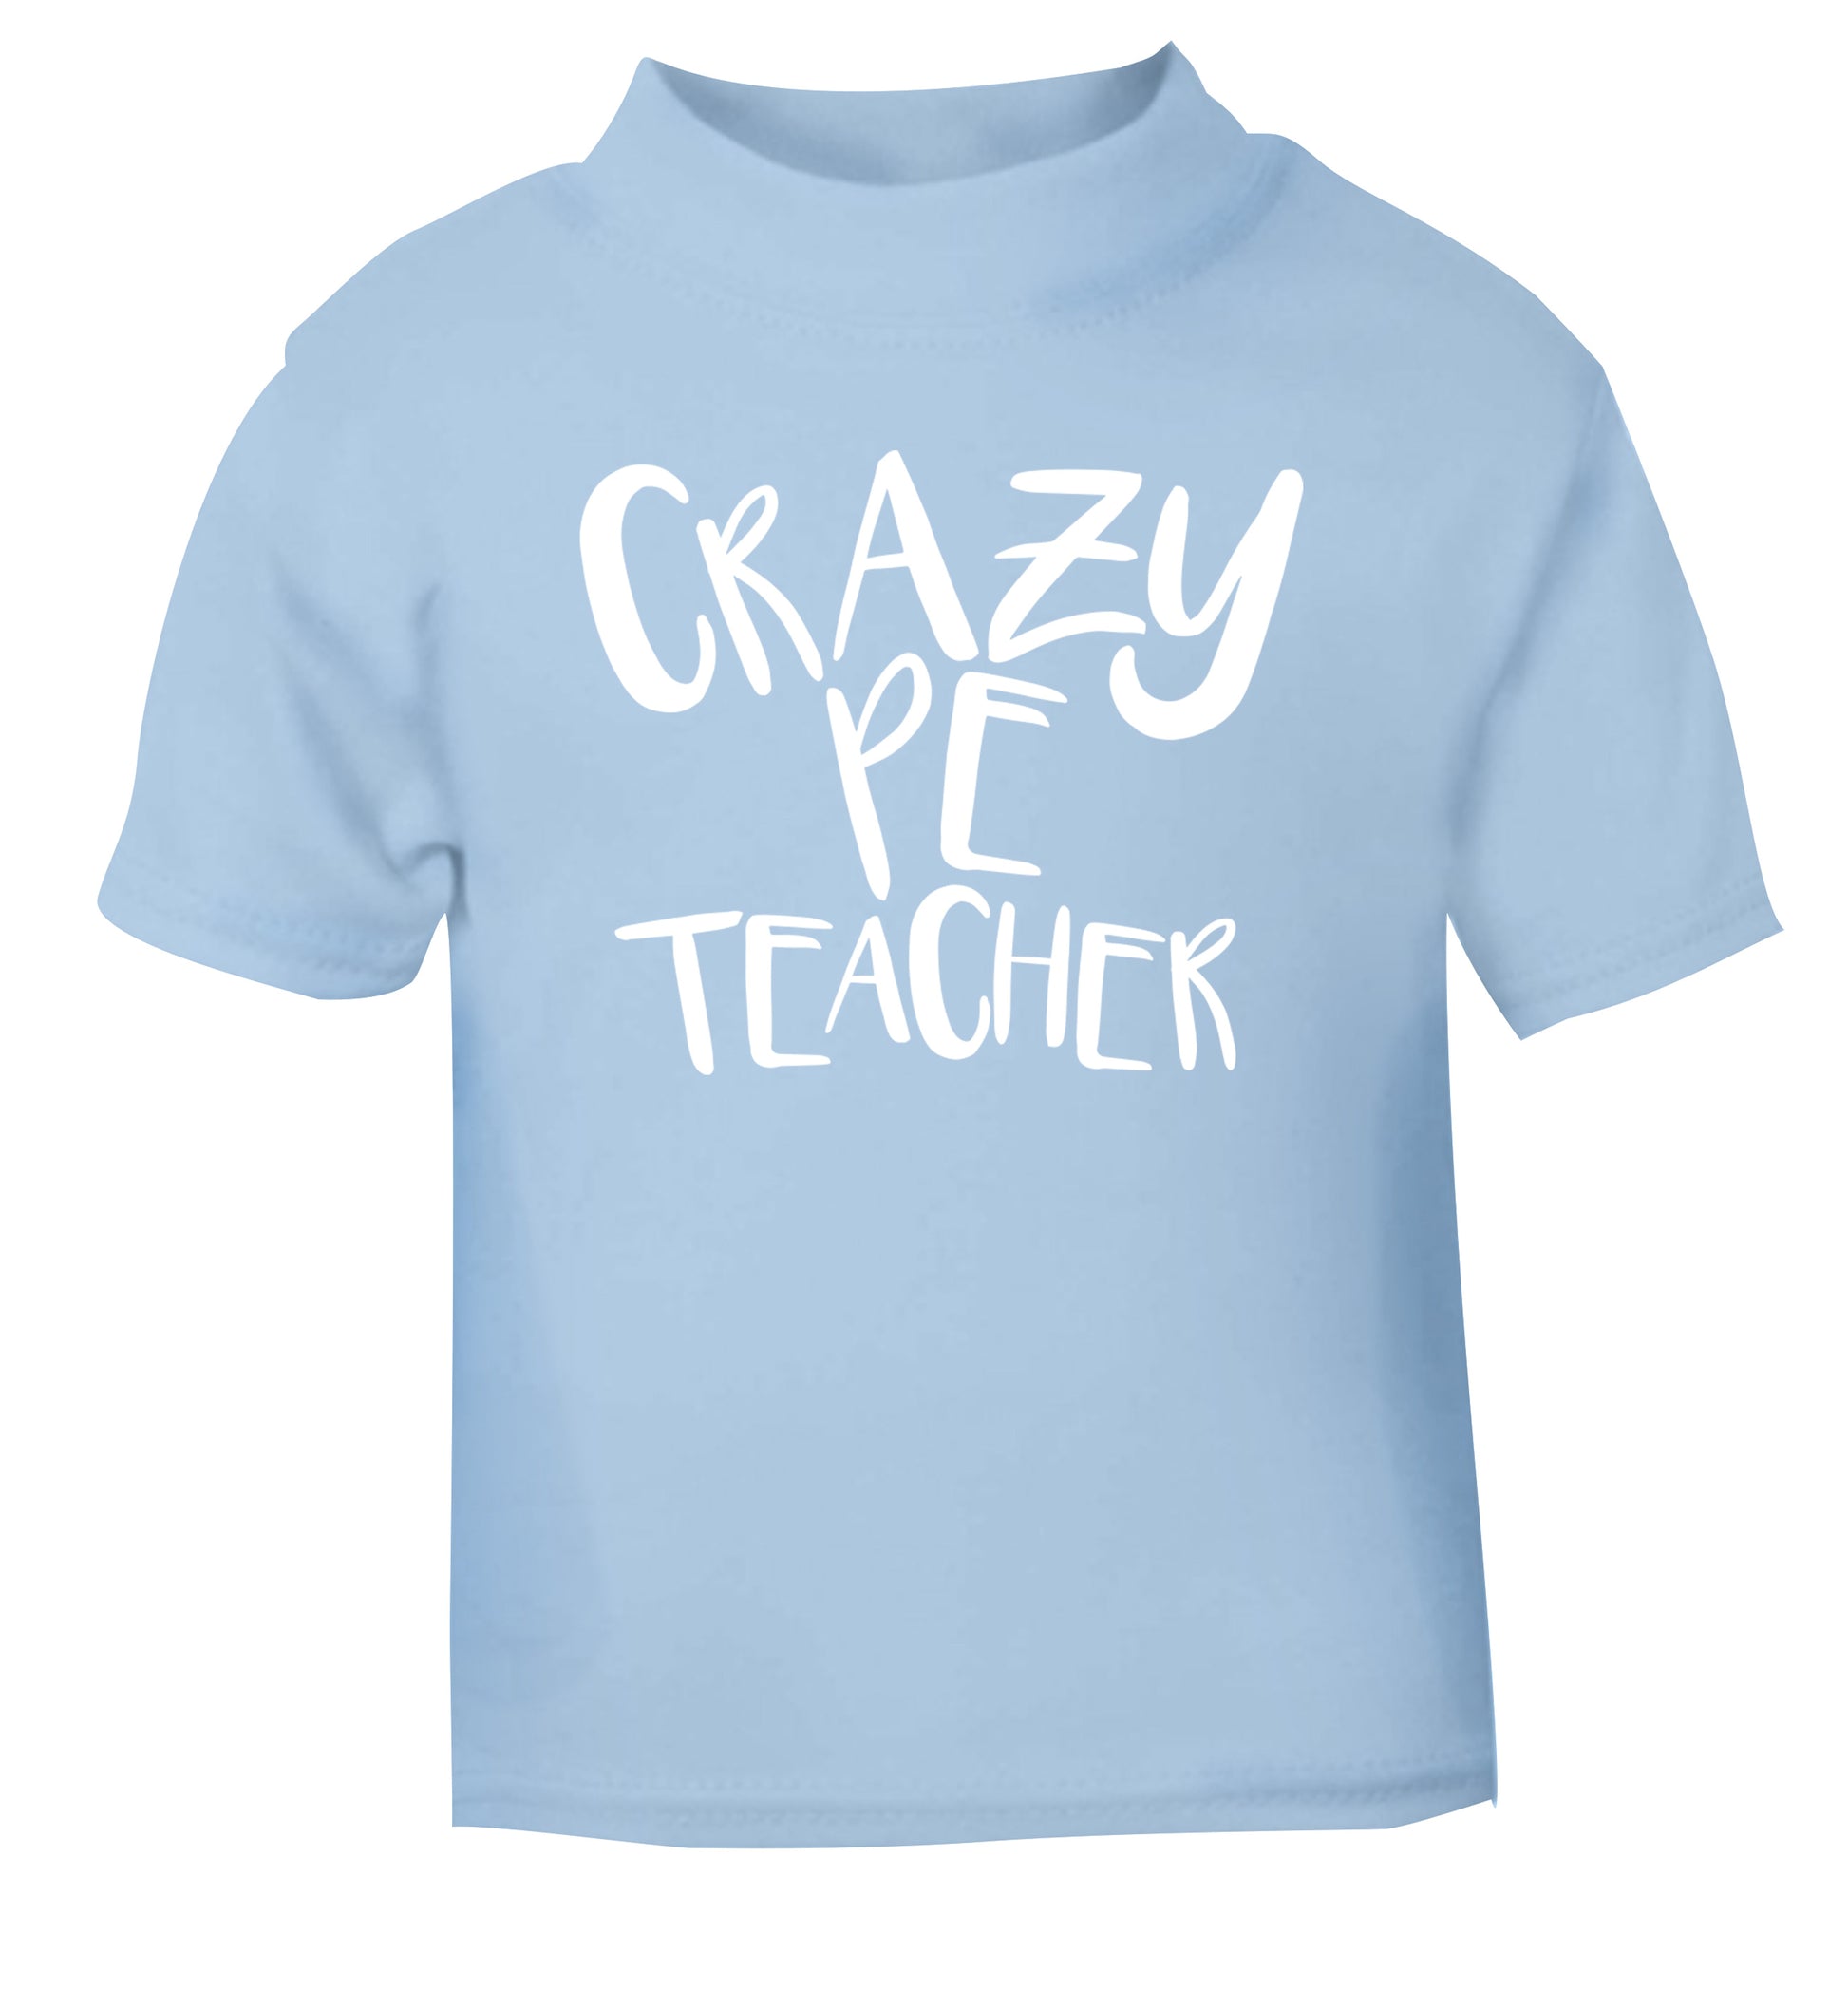 Crazy PE teacher light blue Baby Toddler Tshirt 2 Years